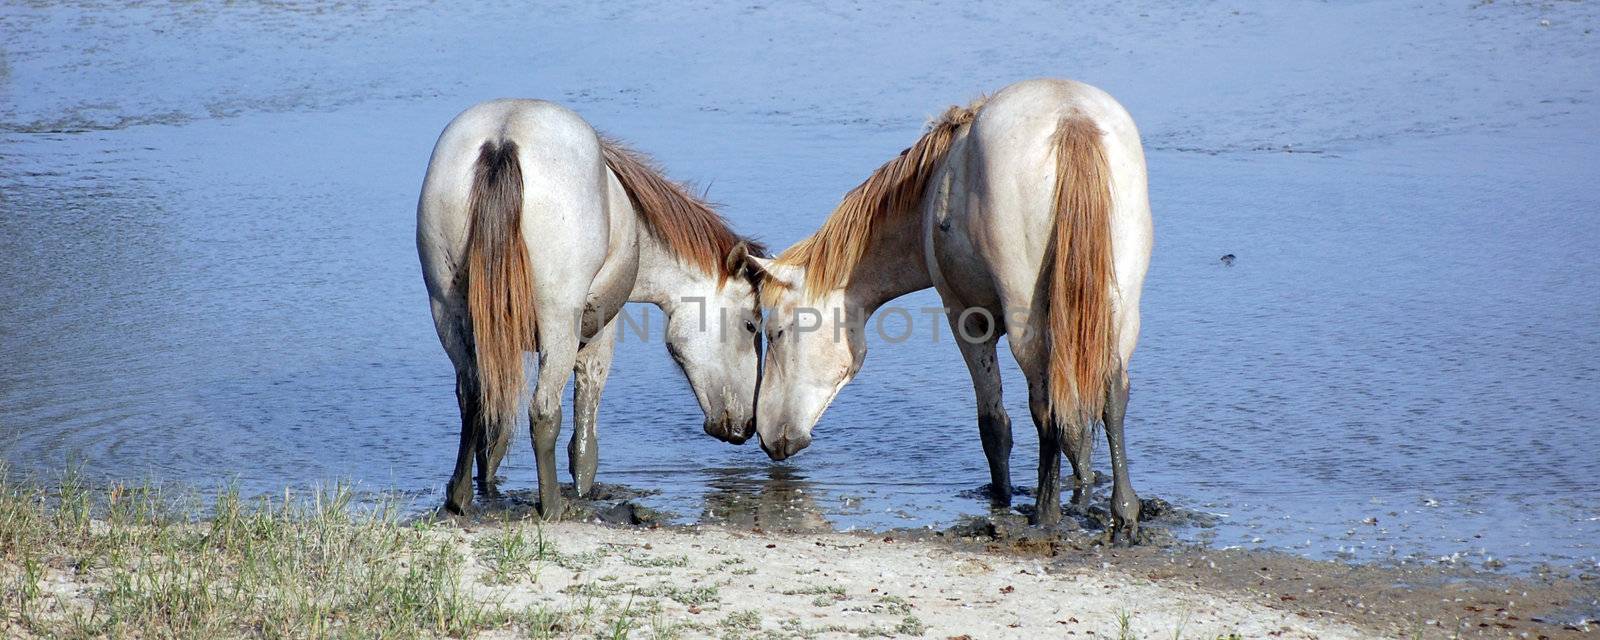 Horses in love by lebanmax